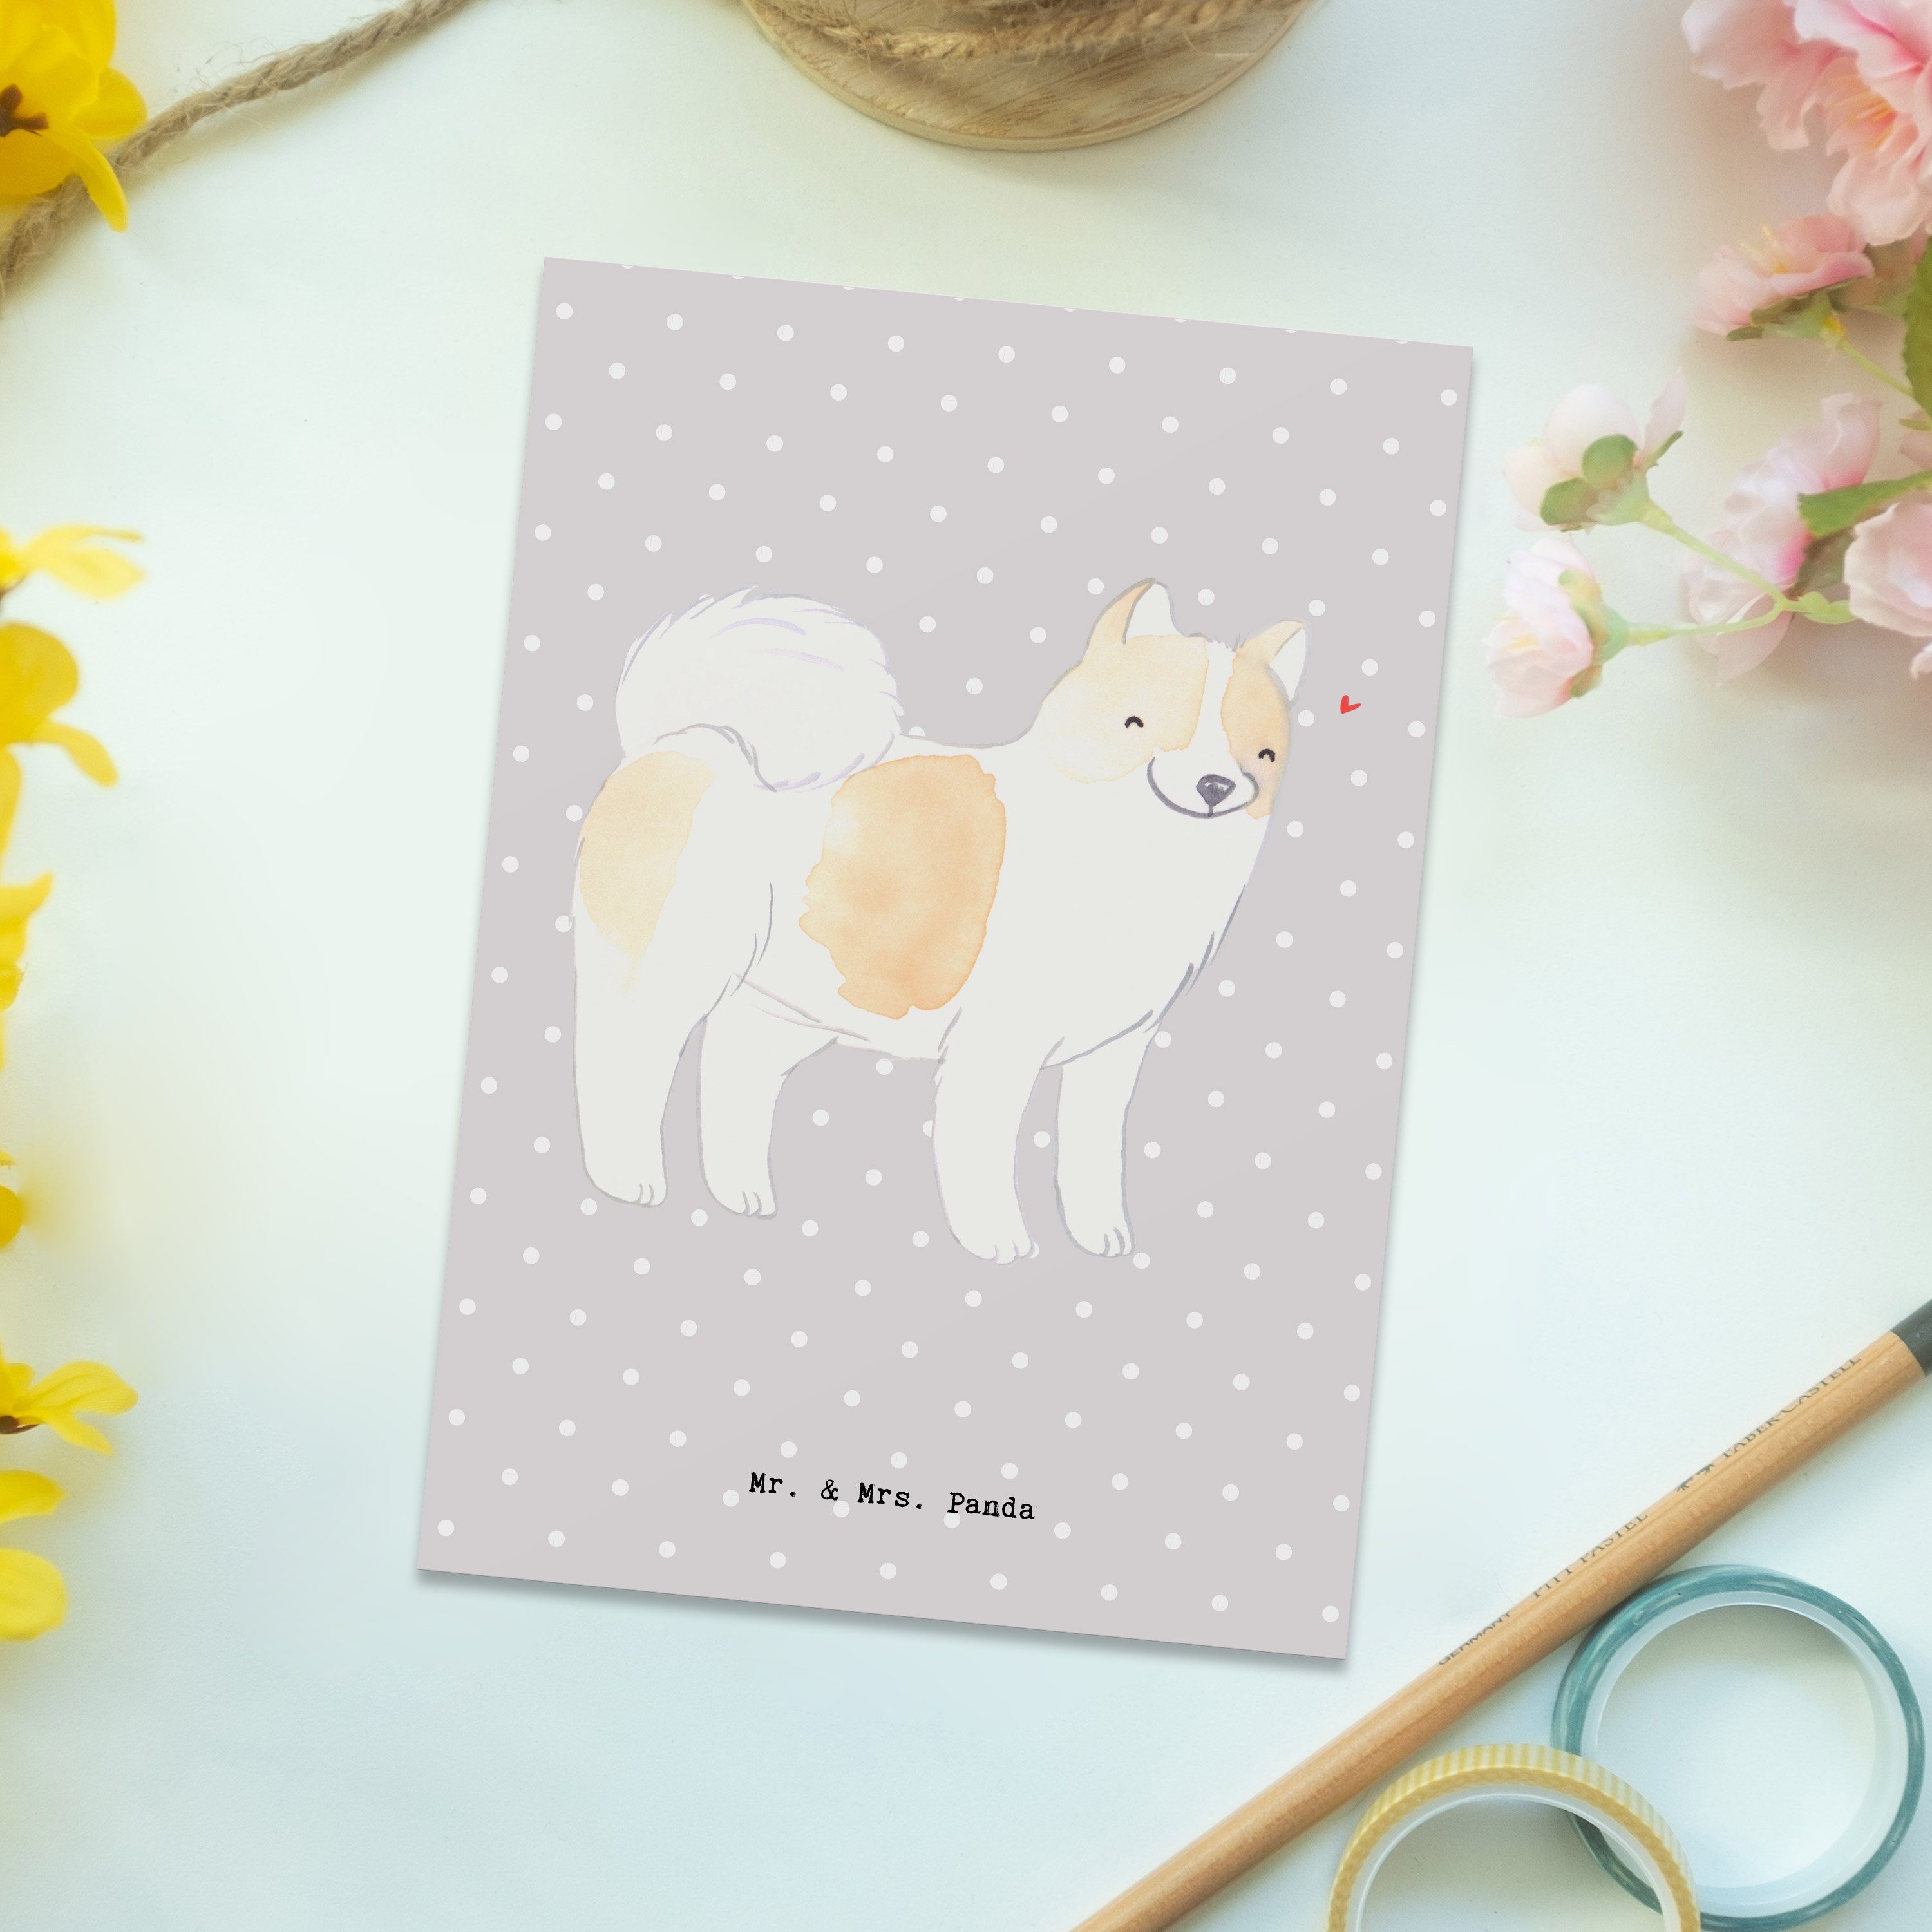 Mr. & Mrs. Panda Postkarte Dank - Bangkaew Grau Thai Geschenk, Moment Pastell Einladungskarte, 